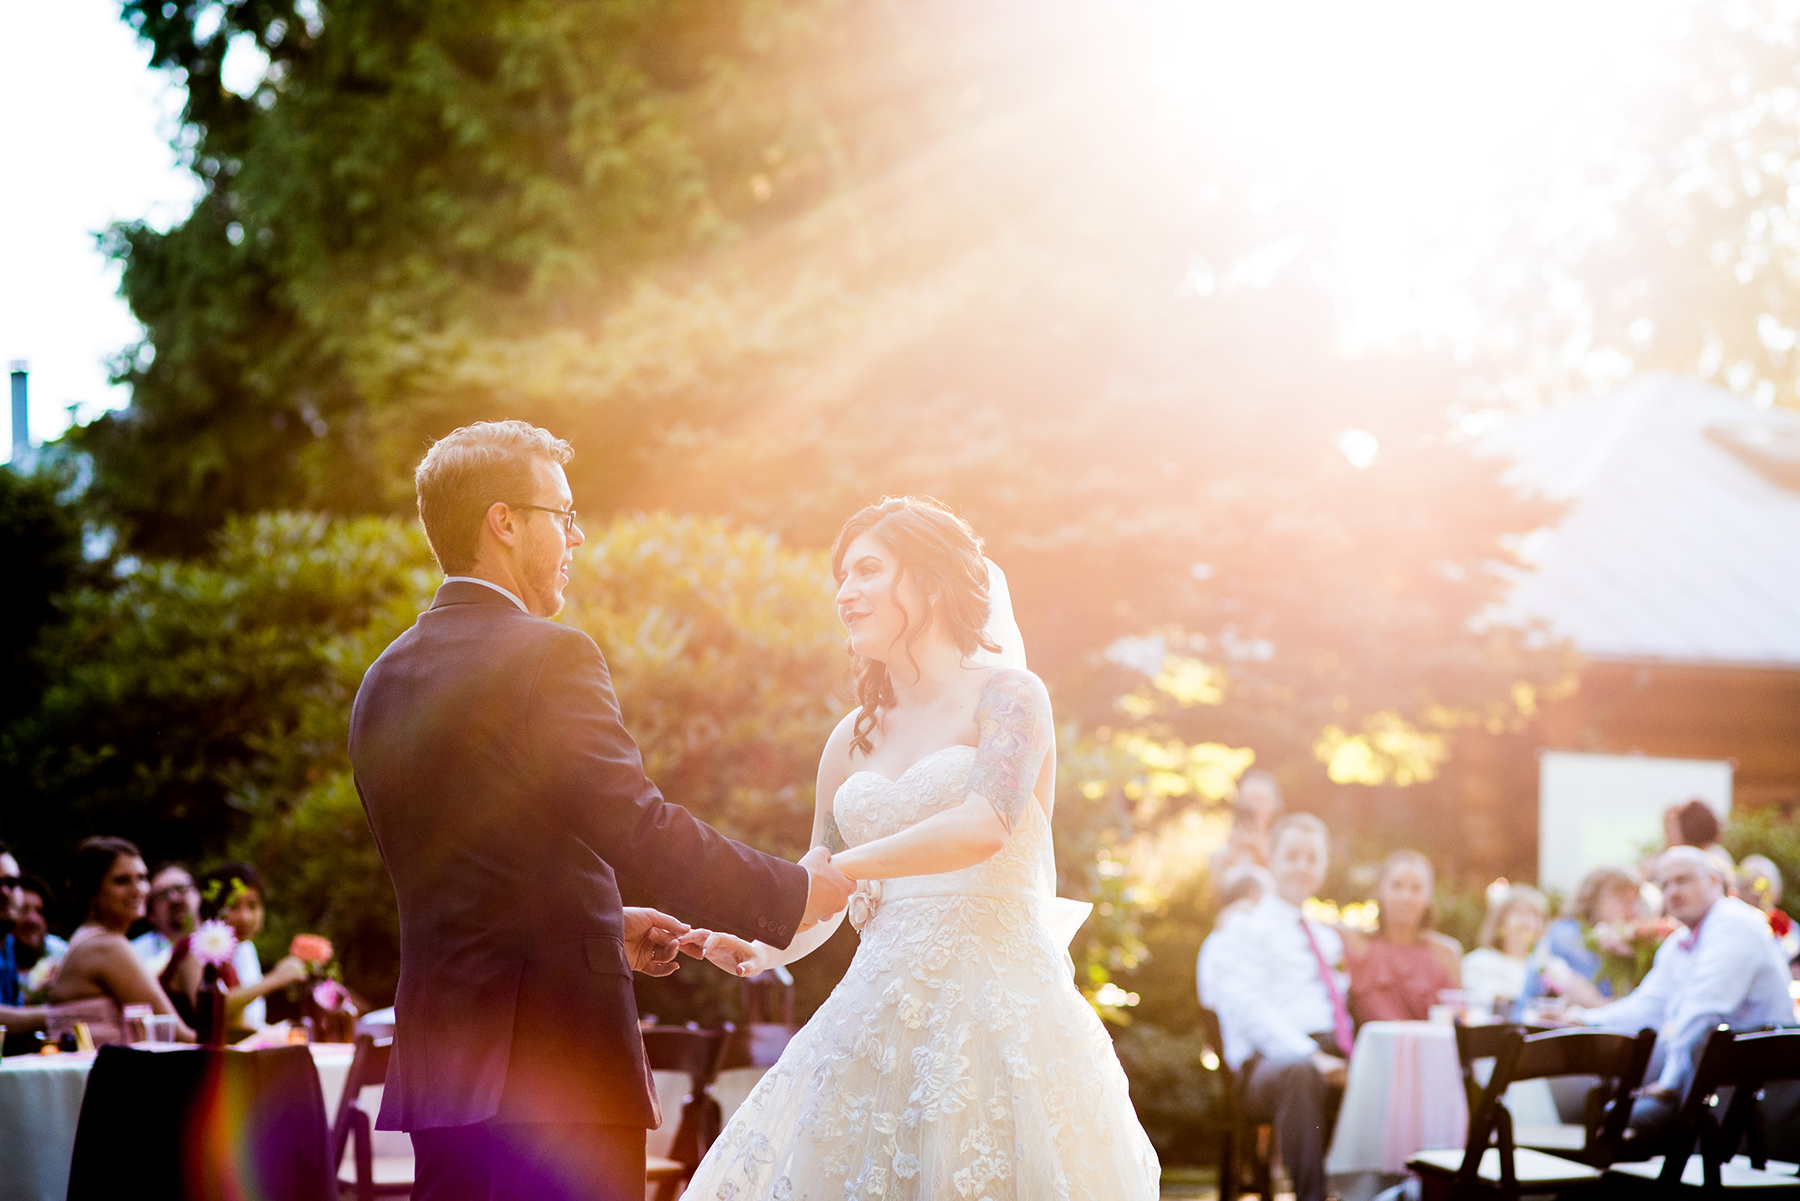 Bellingham backyard wedding first dances